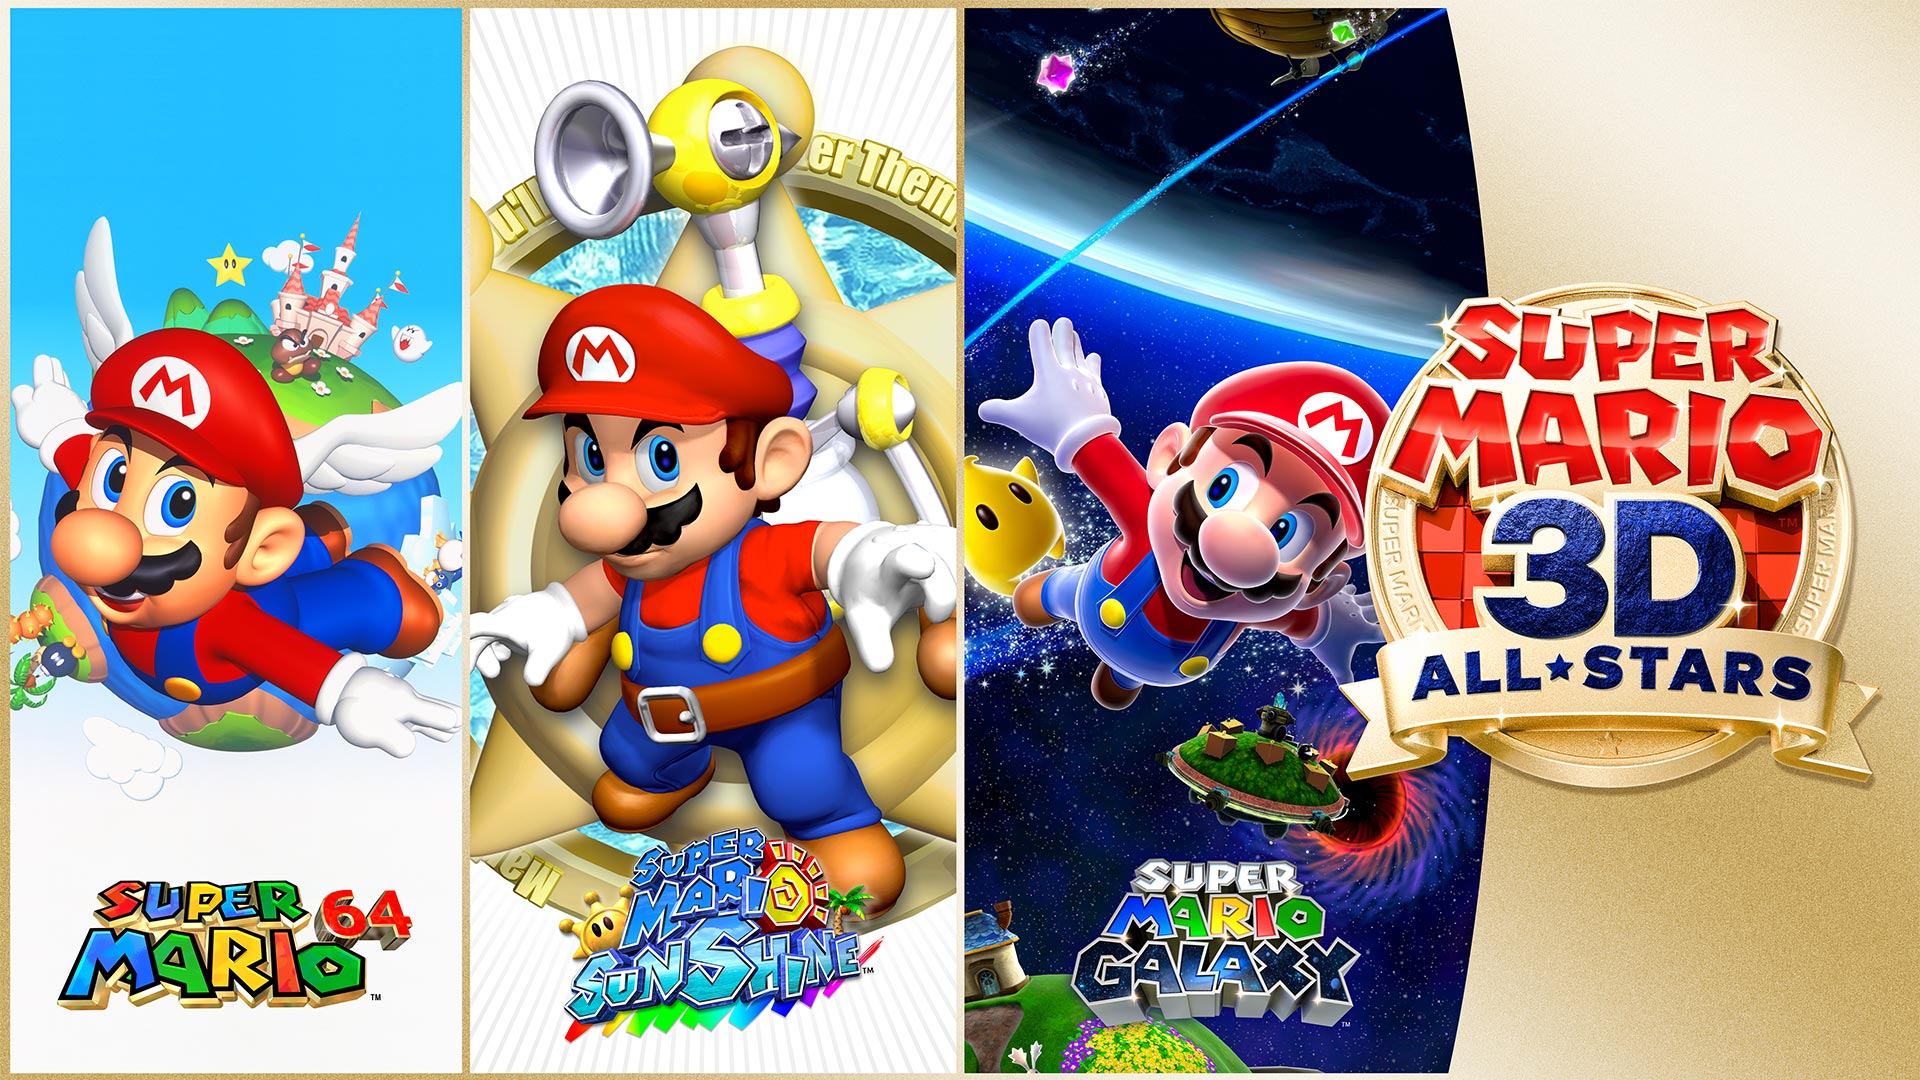 Super Mario Bros Wallpaper, Games / Others: Super Mario Bros, Game